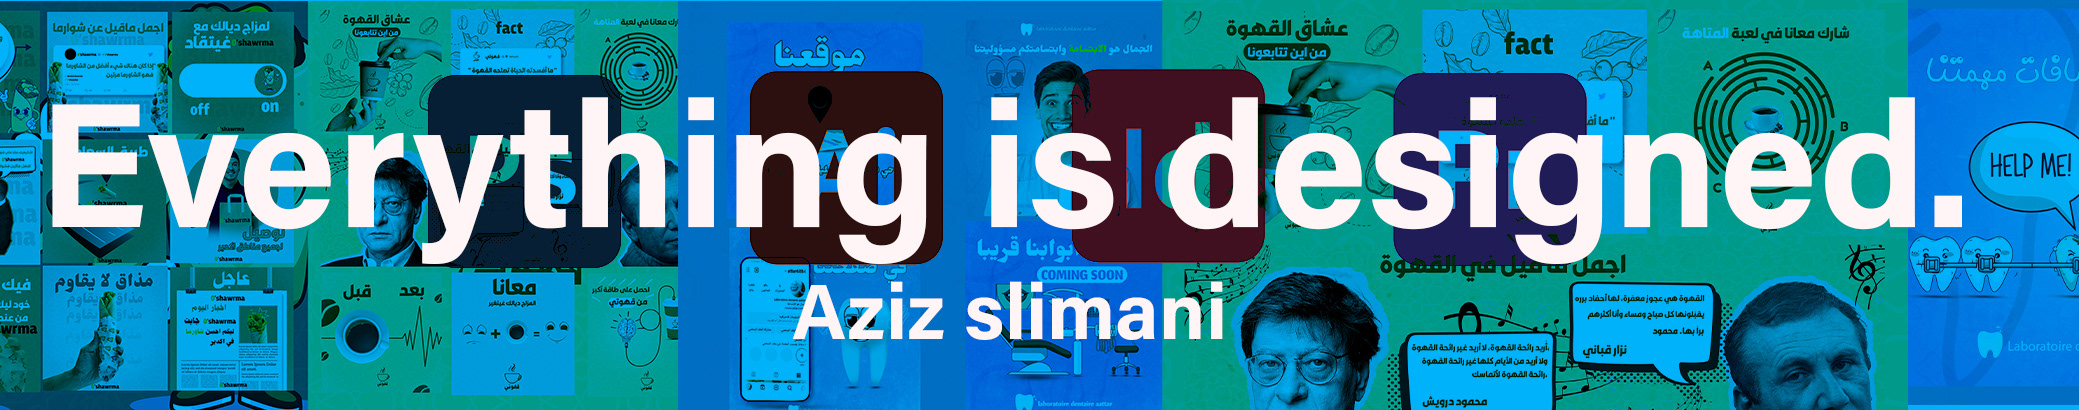 Banner de perfil de Aziz slimani